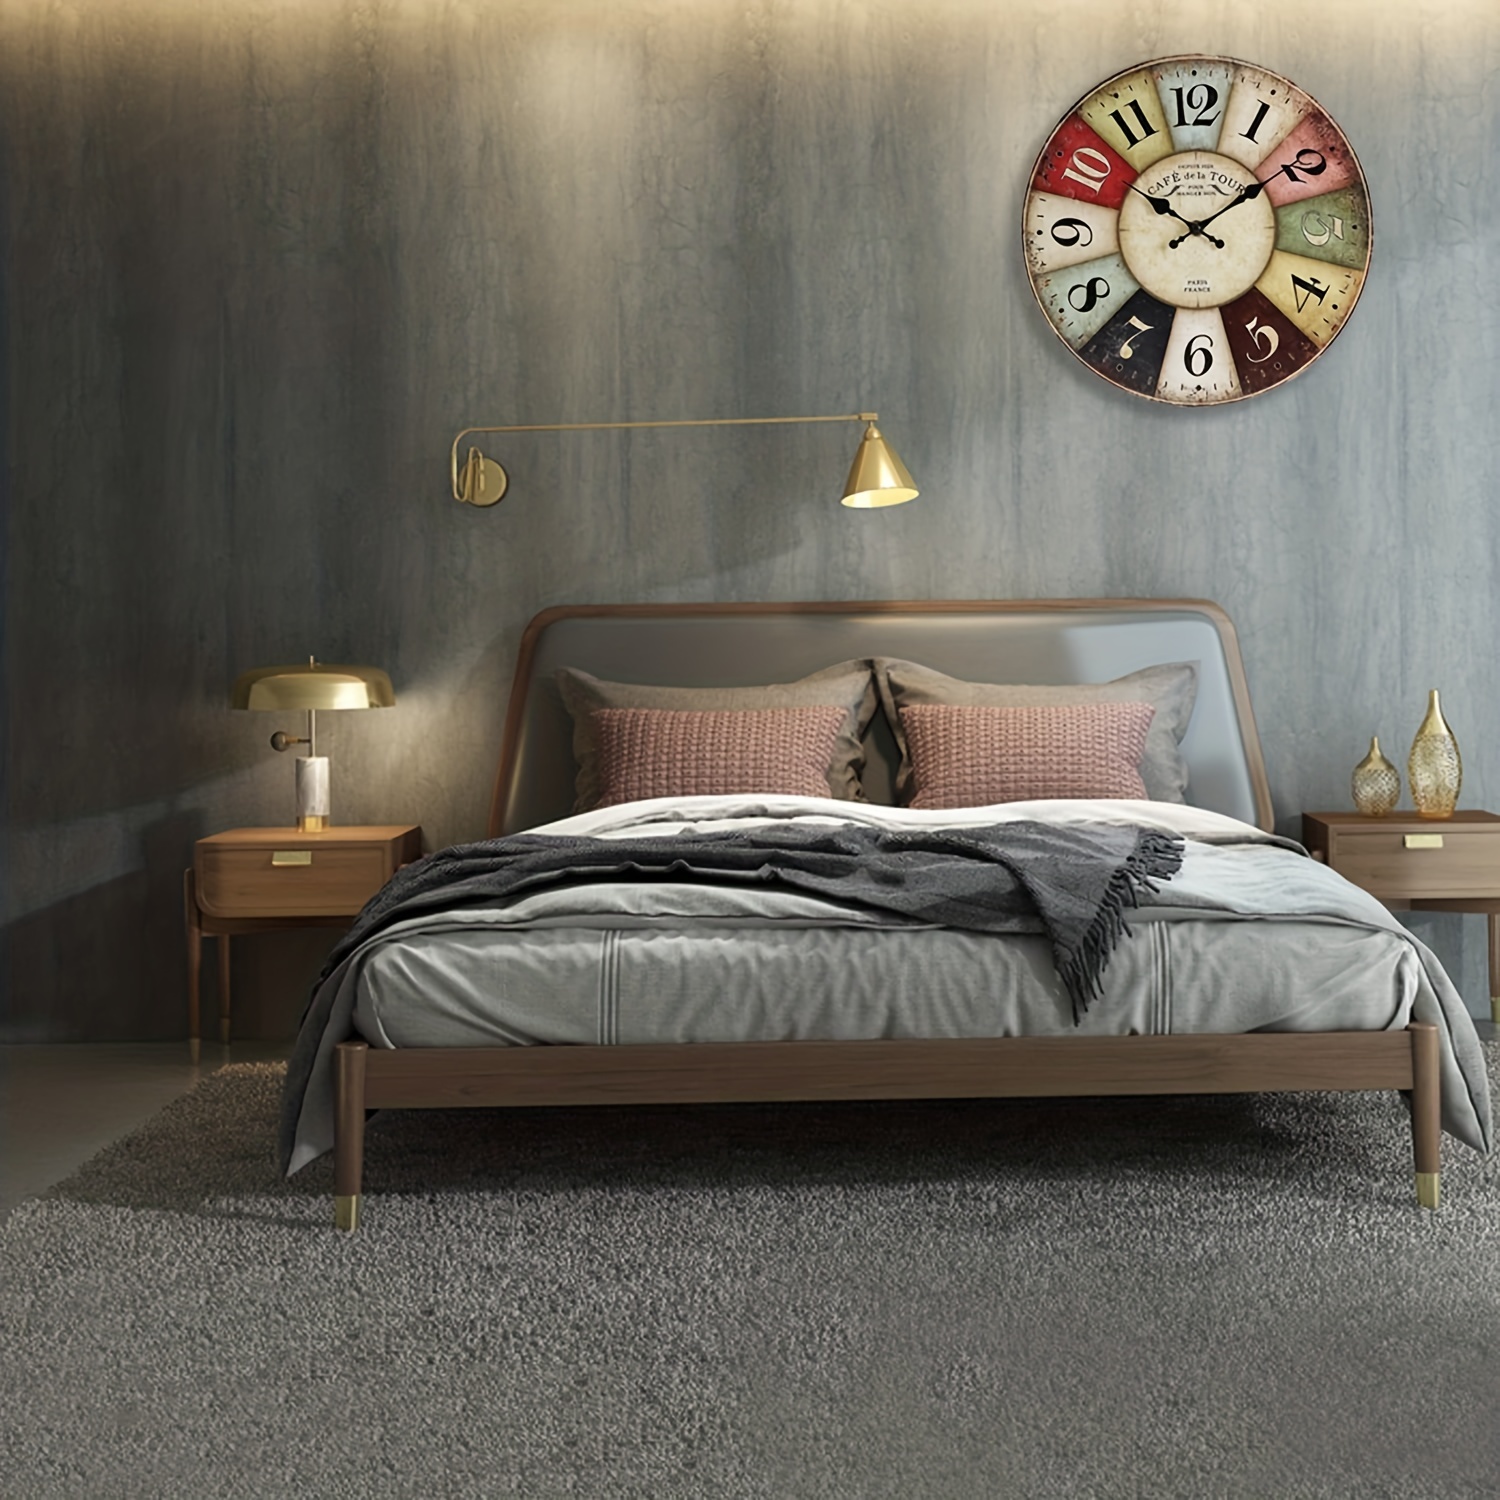 Gdrasuya10 Reloj de pared de cuco de madera, cuarzo silencioso, funciona  con pilas, relojes de cuco decorativos para sala de estar, dormitorio